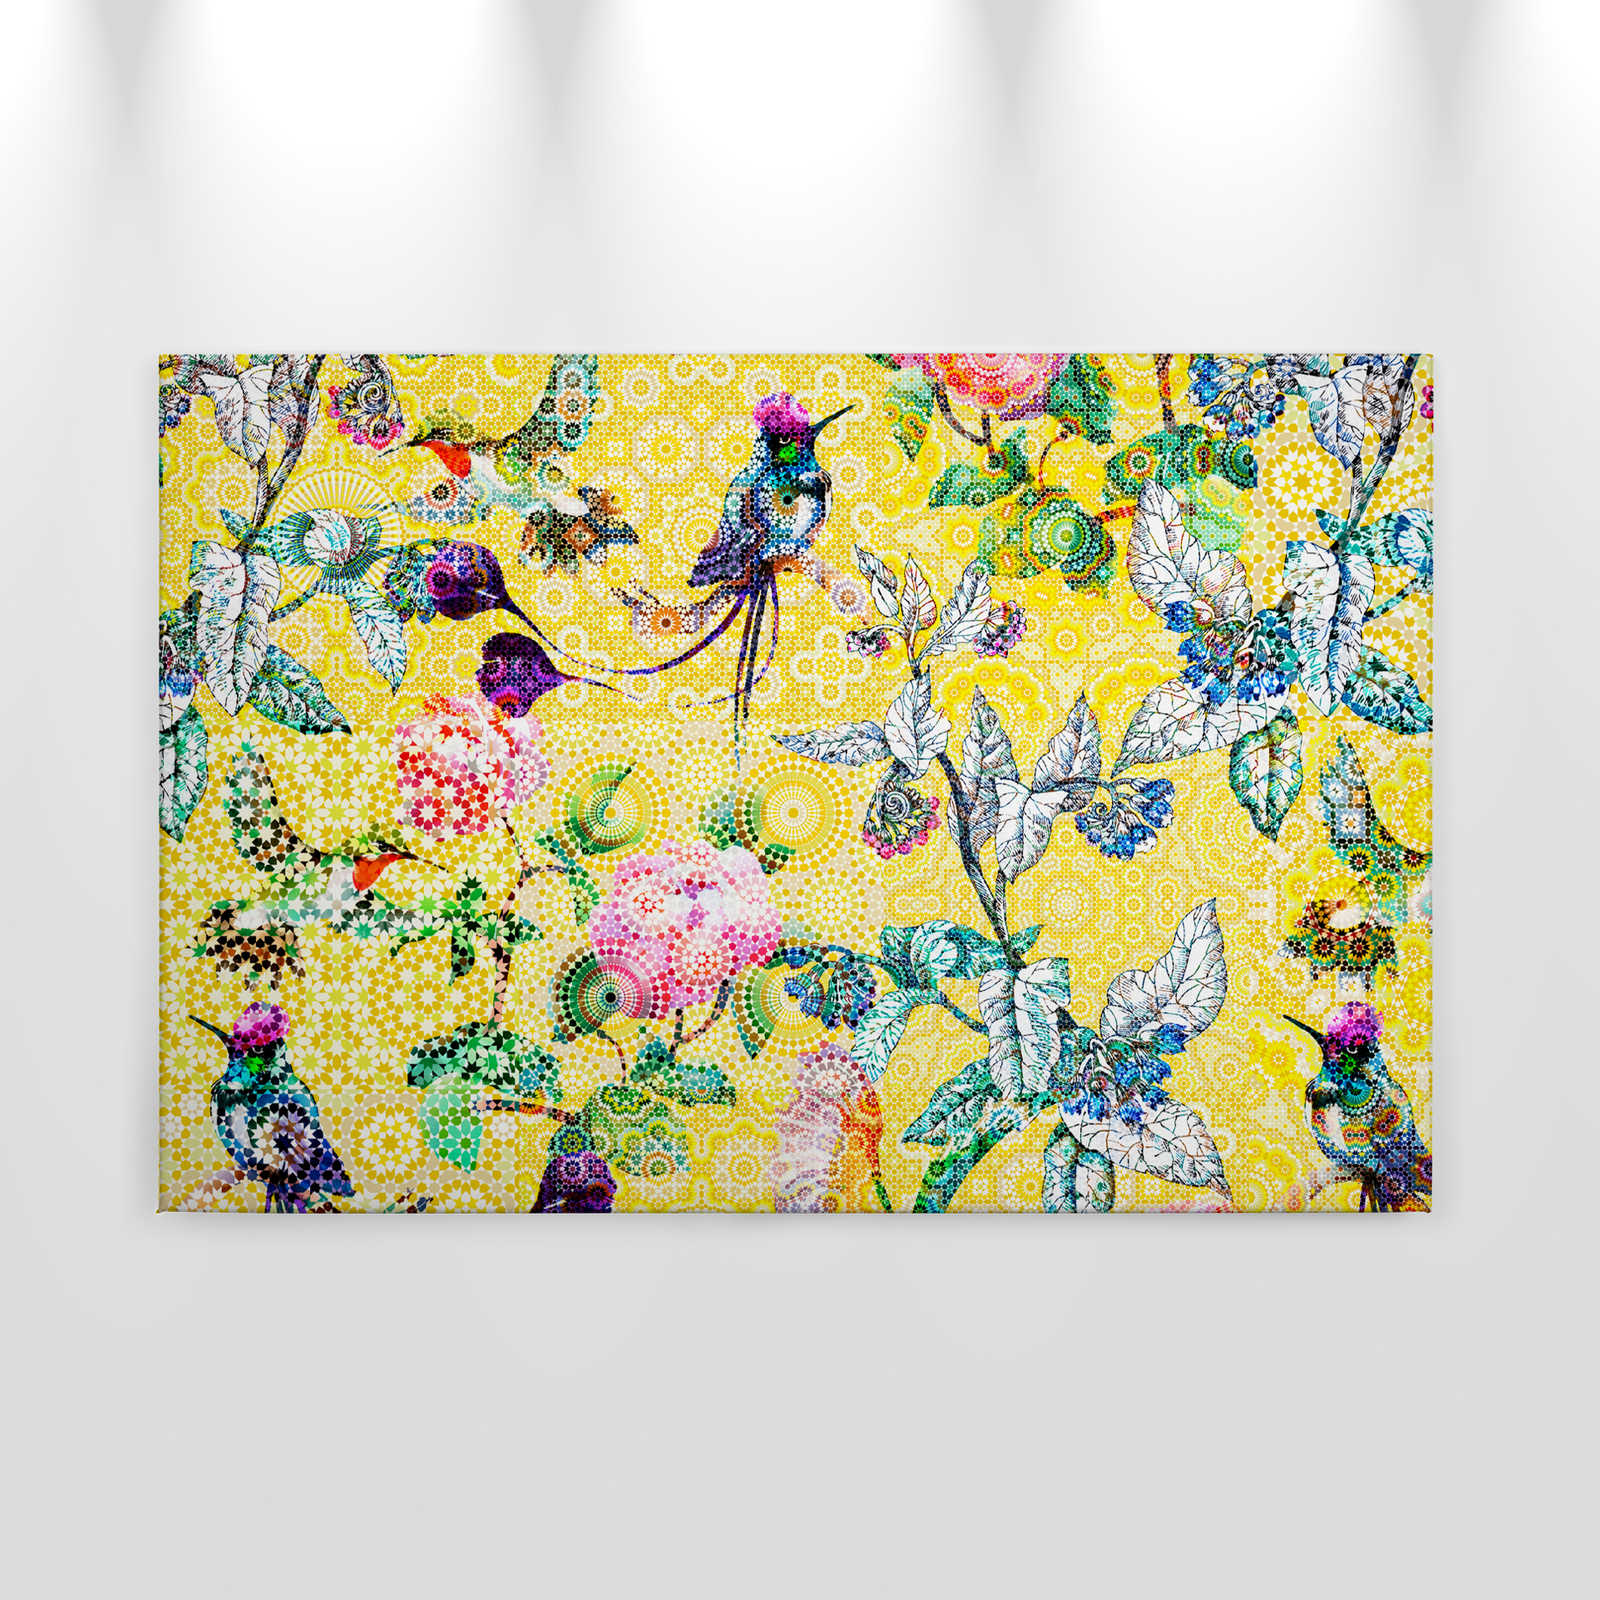             Canvas schilderij exotische bloemen mozaïek - 0,90 m x 0,60 m
        